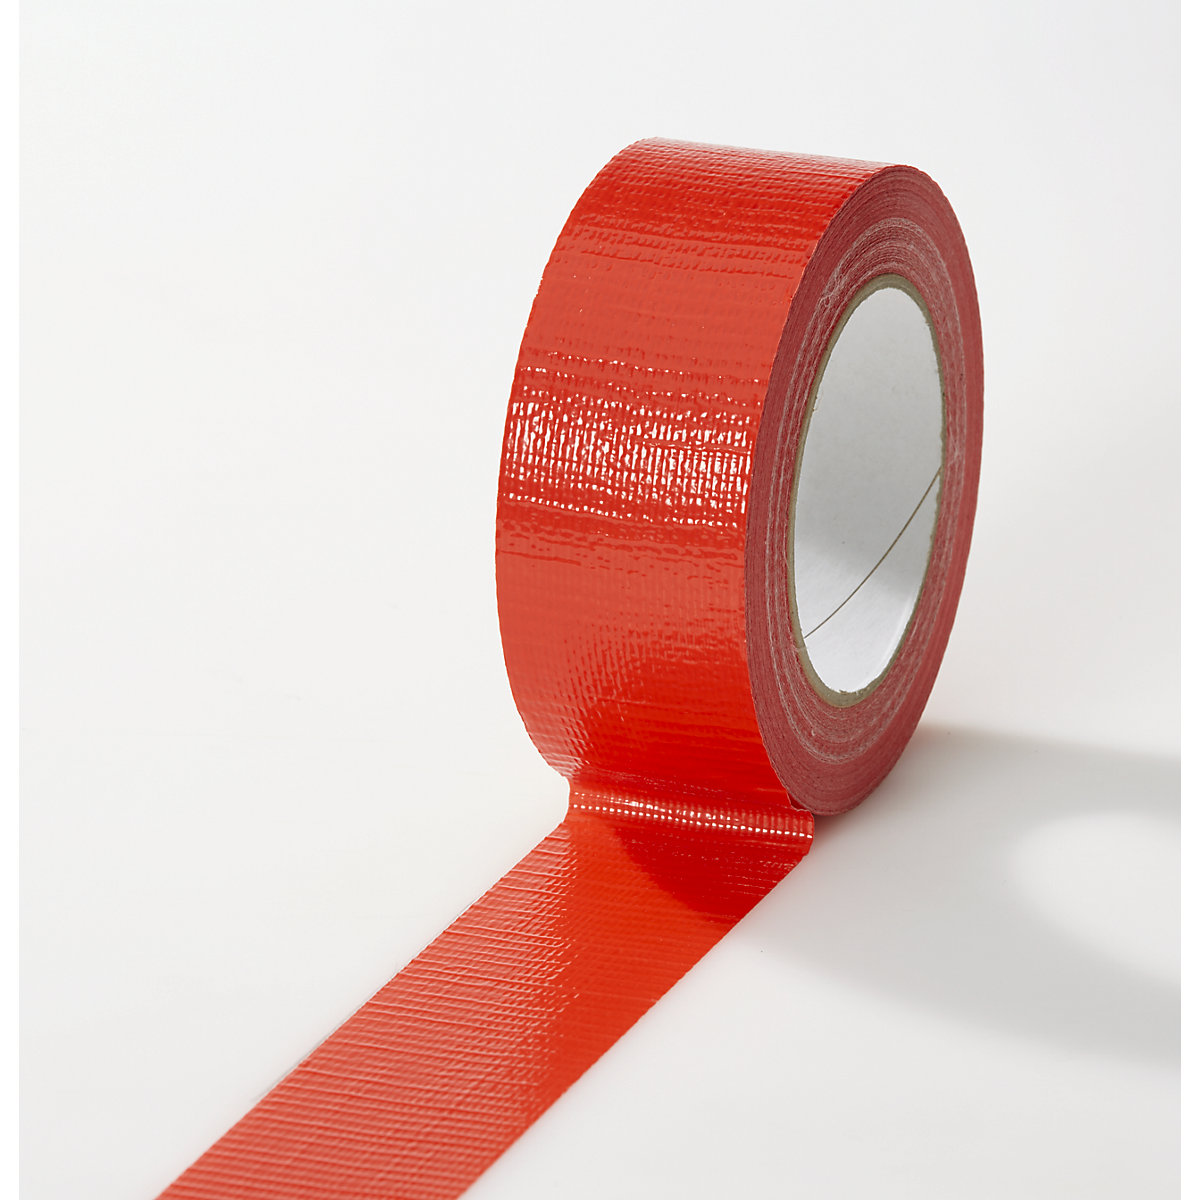 Tkaninová páska, v různých barvách, bal.j. 24 rolí, červená, šířka pásky 38 mm-3